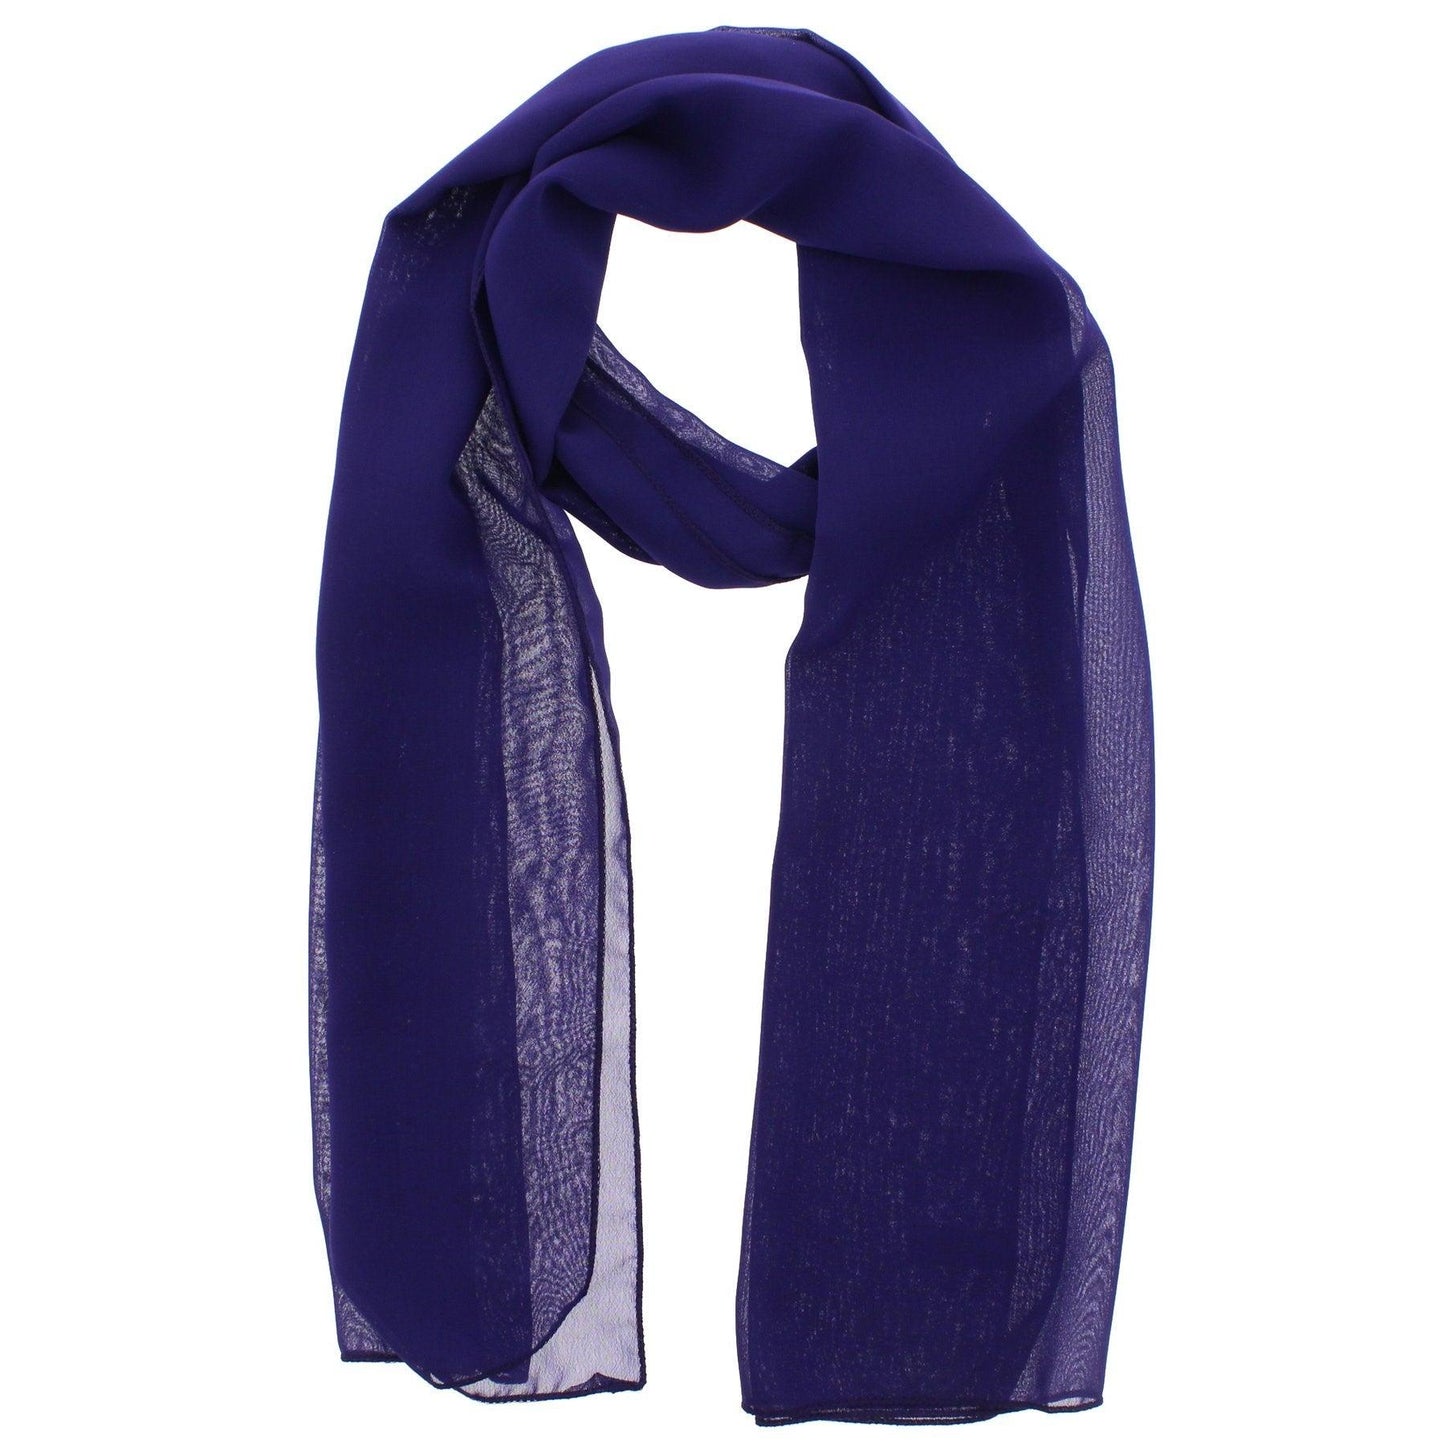 Chiffon scarf 150x 45 cm by WESTEND CHOICE Scarves & Shawls all scarves, boys, chiffon scarves, girls, kids, men, plain chiffon scarves, women